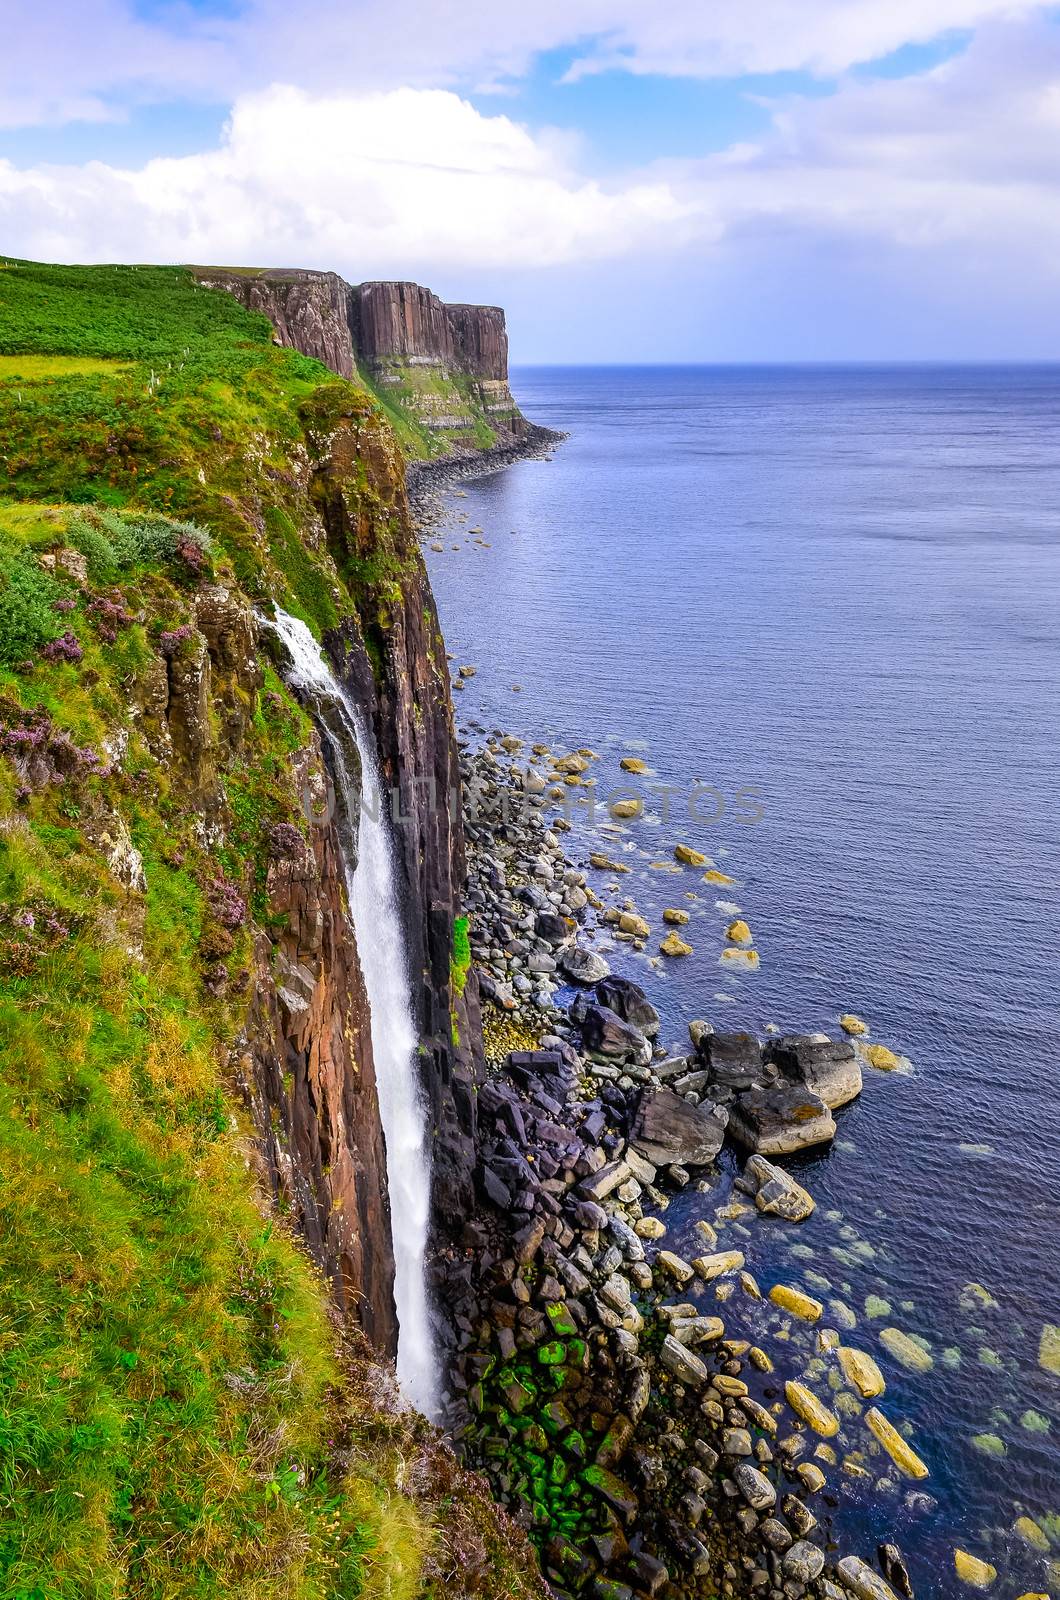 Kilt rock coastline cliff in Scottish highlands by martinm303